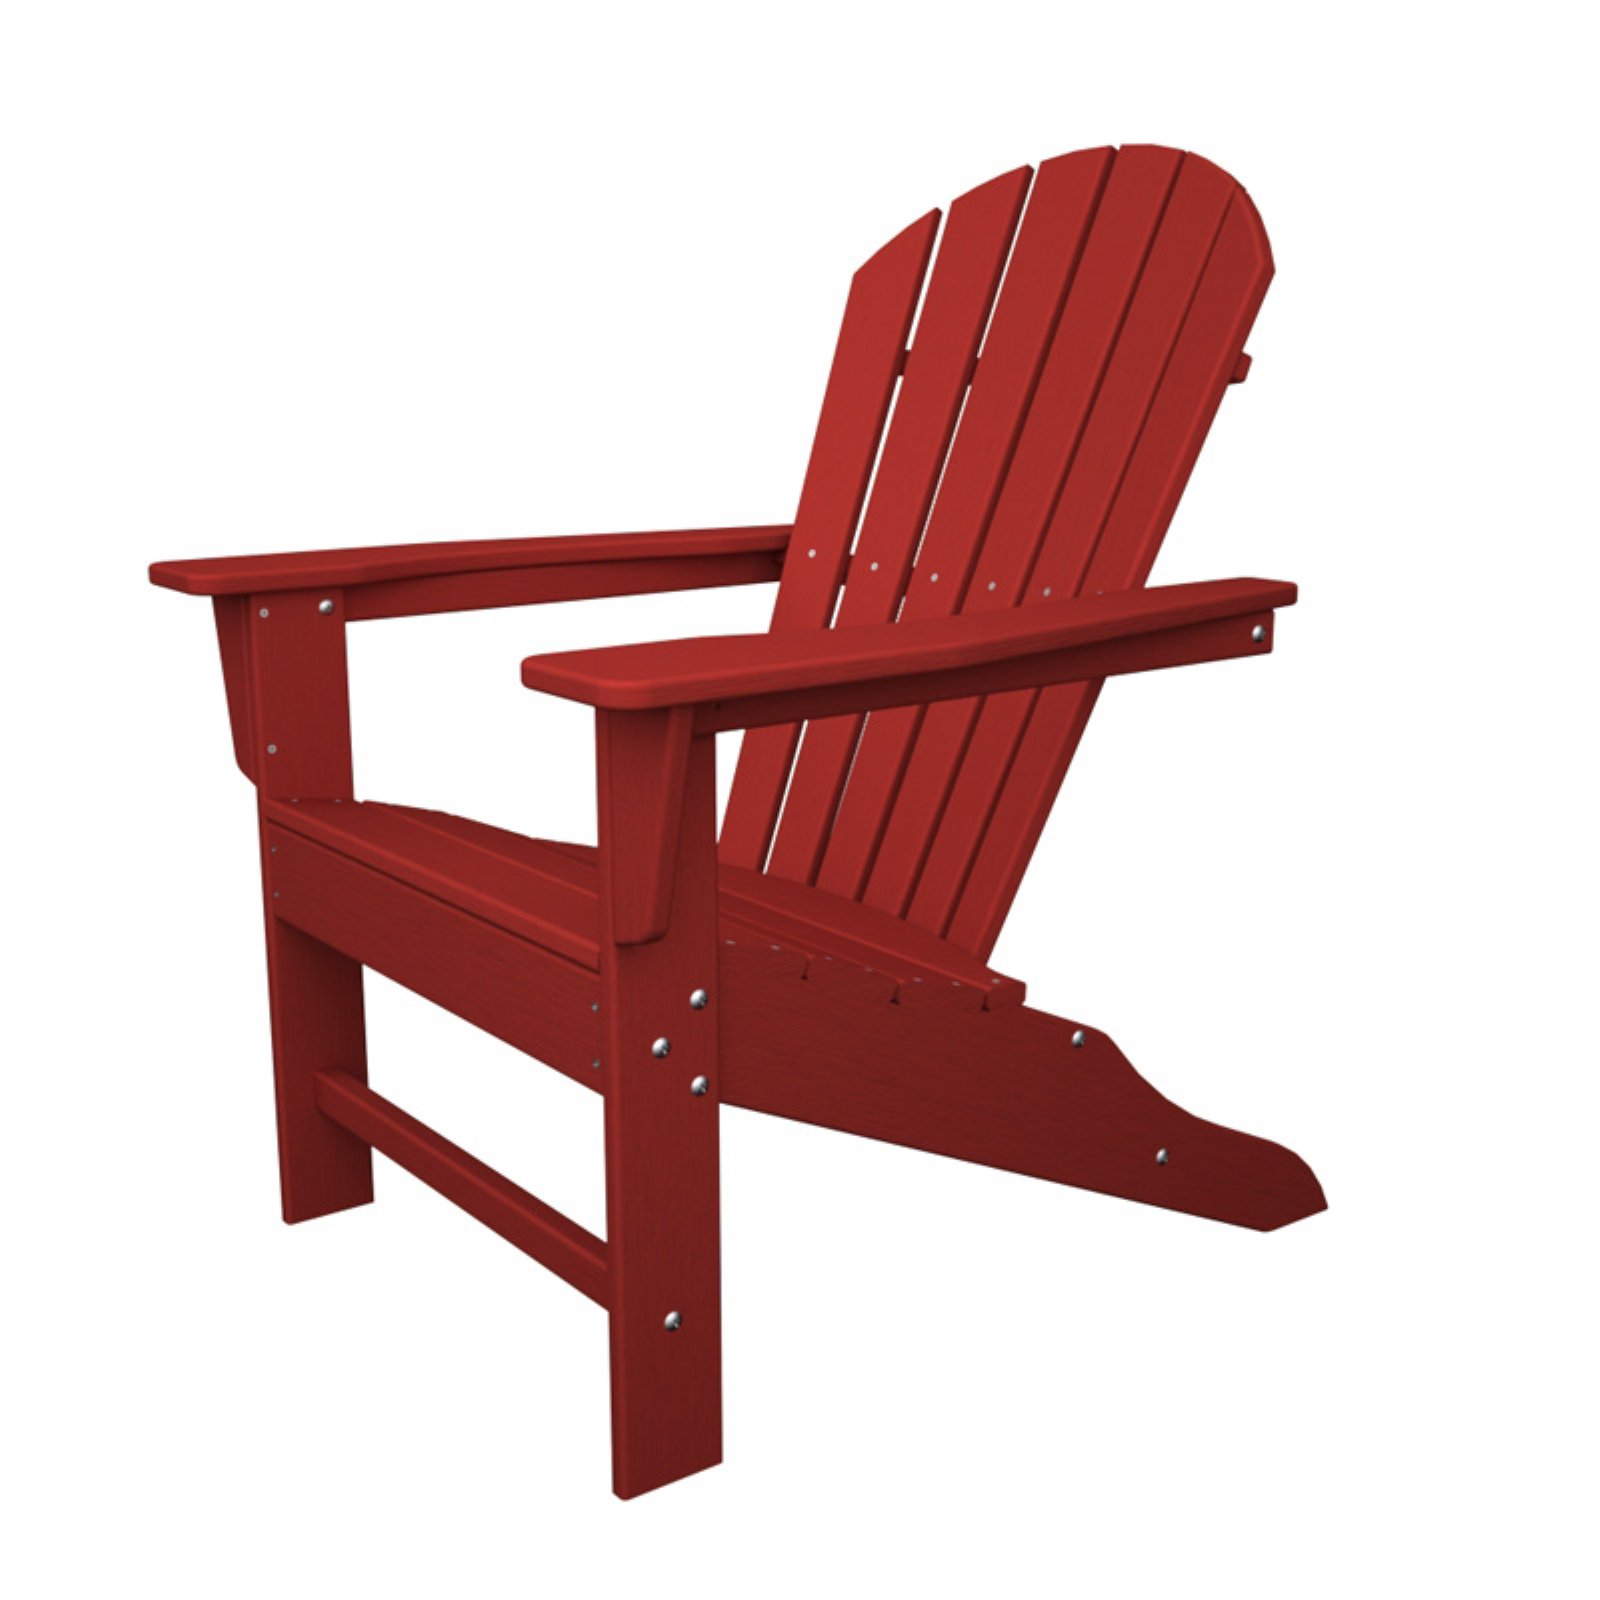 POLYWOOD SBA15SR South Beach Adirondack Chair - Sunset Red - image 1 of 11